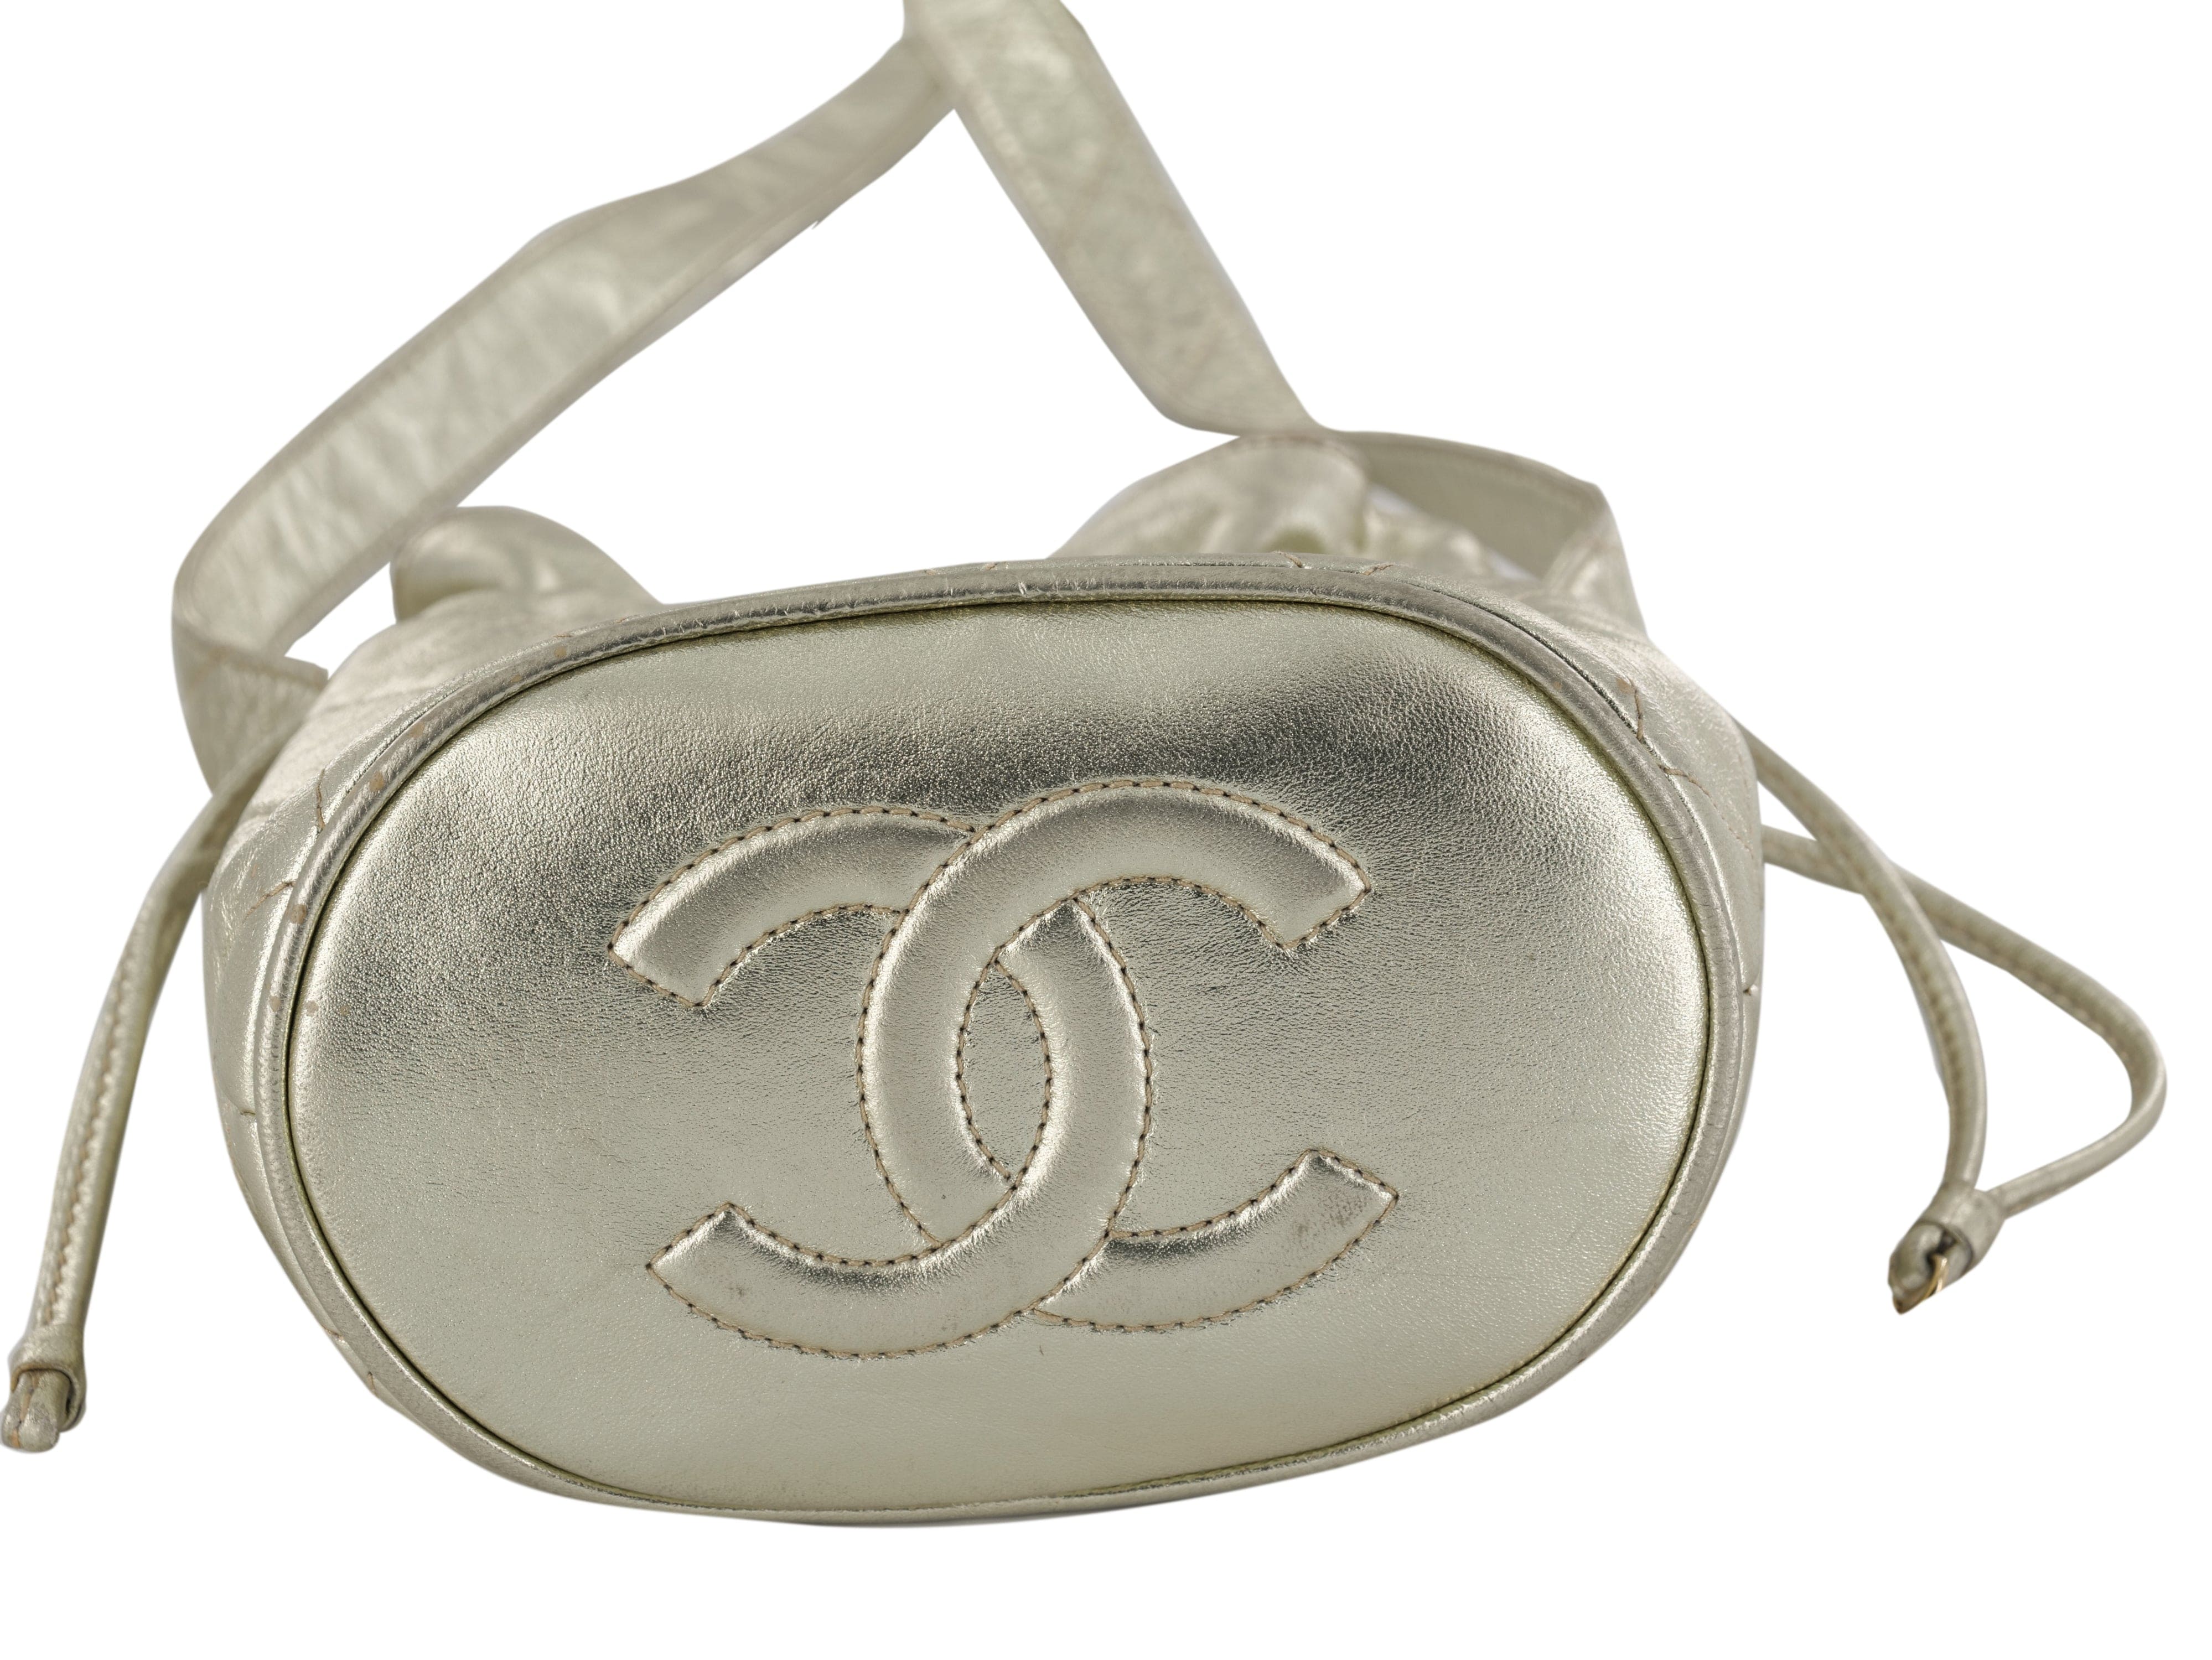 Chanel Chanel Vintage Gold Lambskin Small Drawstring bag - AWC1252